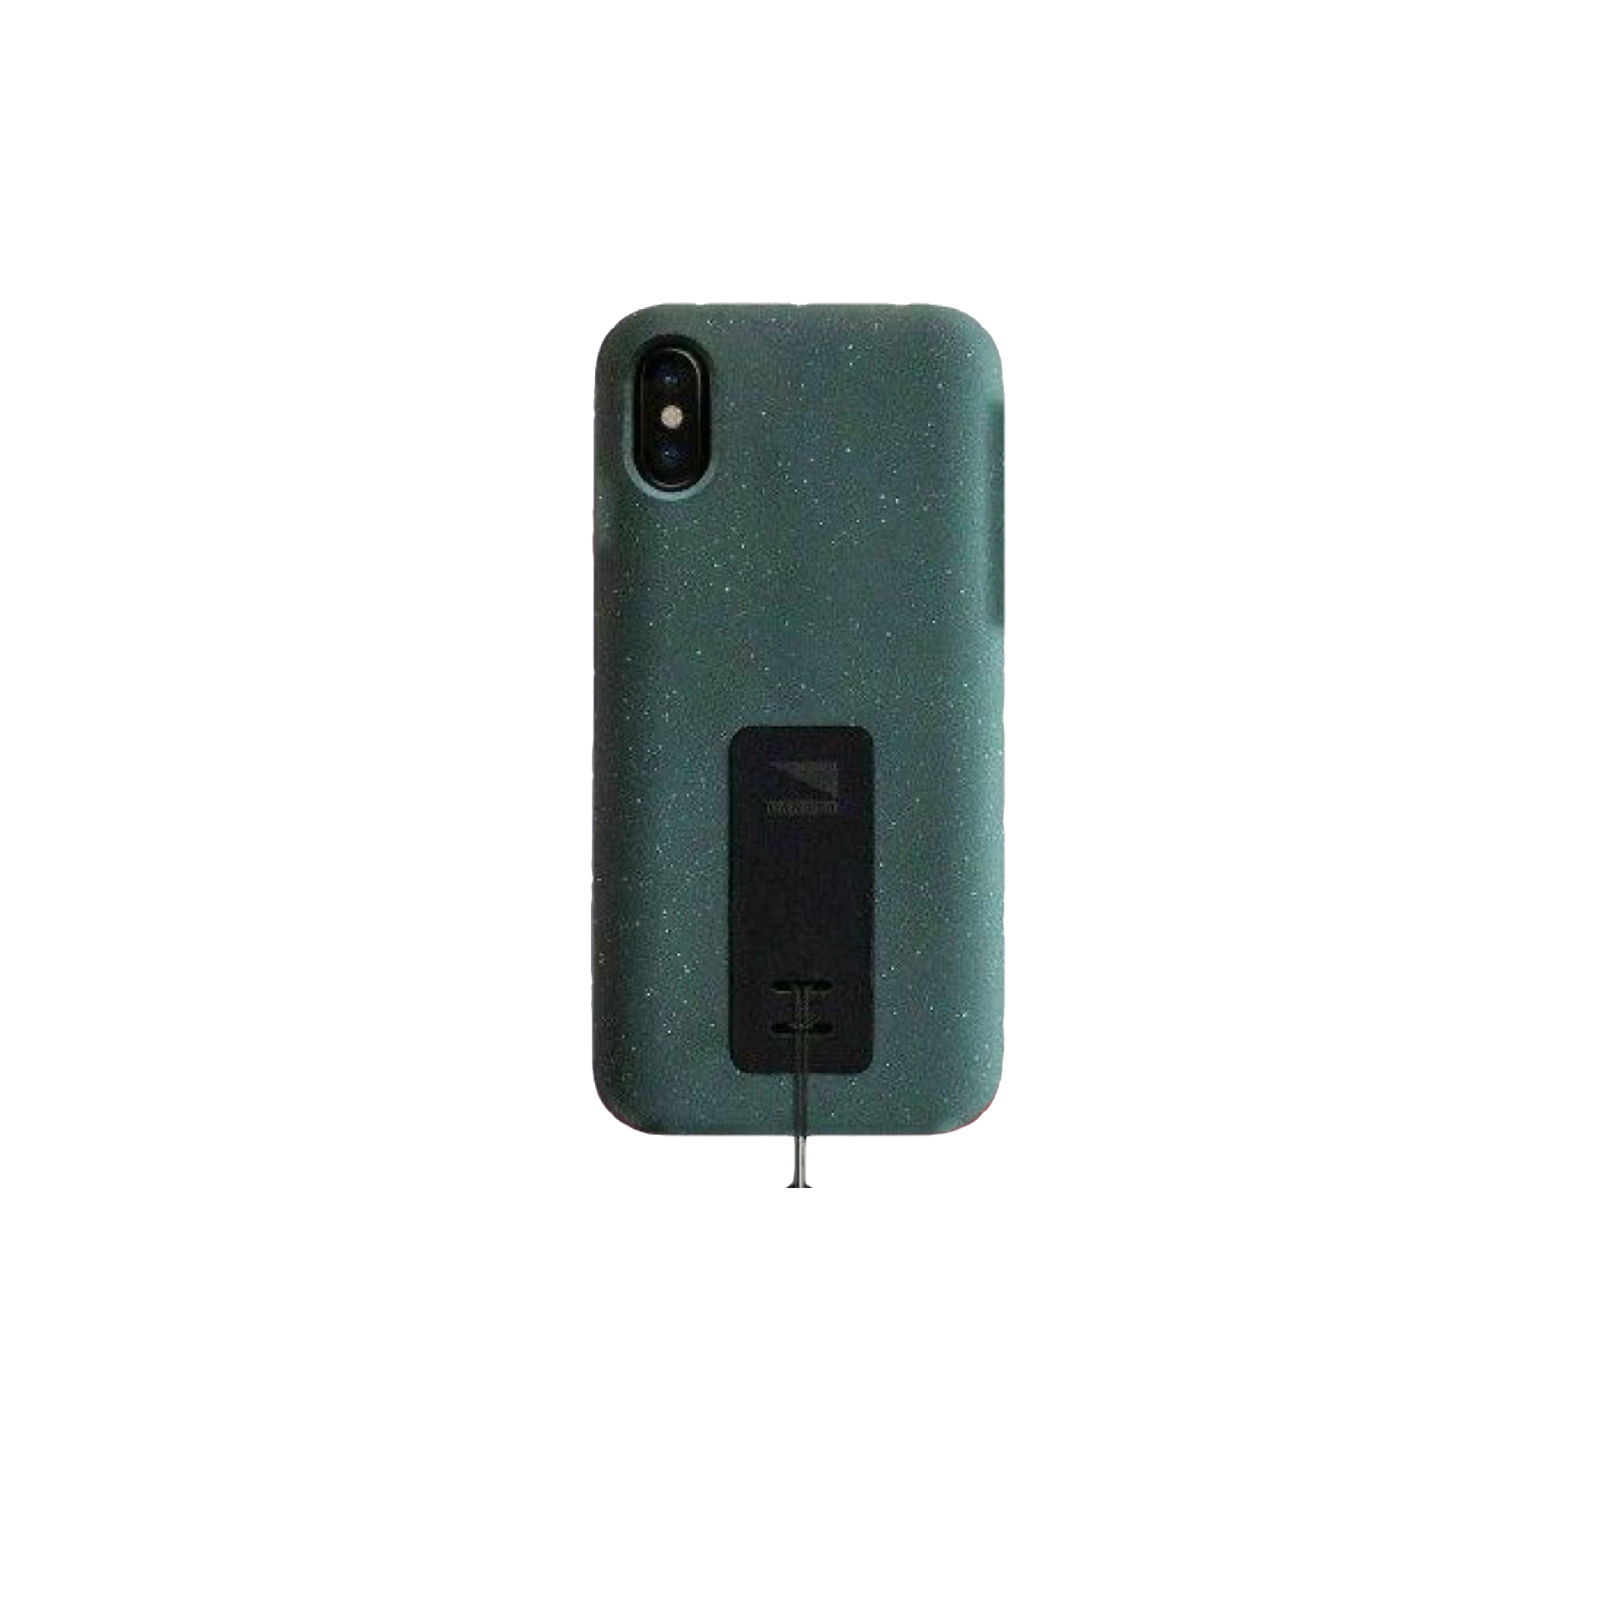 Lander Moab iPhone X/Xs Green Case Brand New